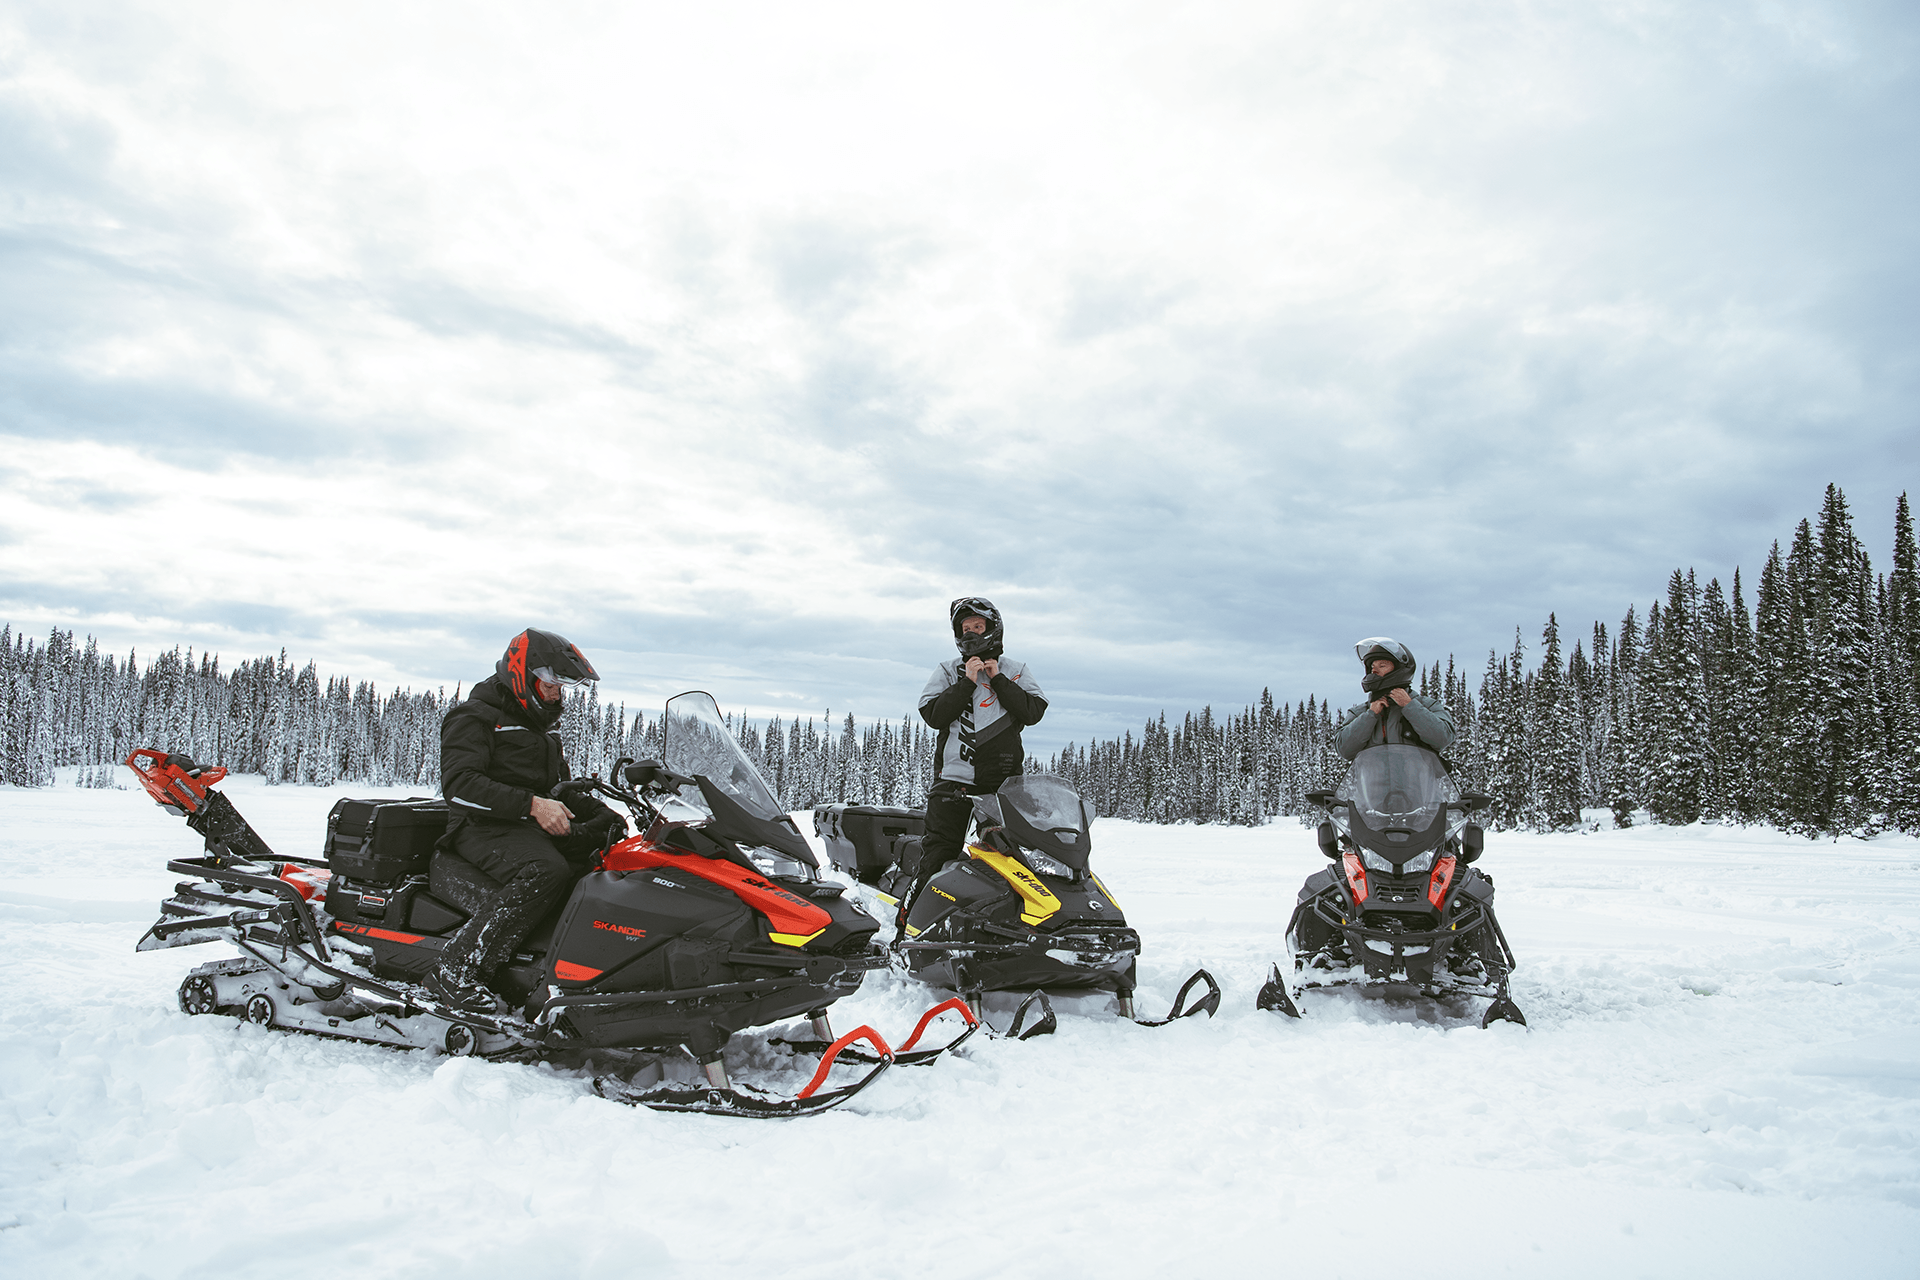 Three riders preparing to ride a snowmobile